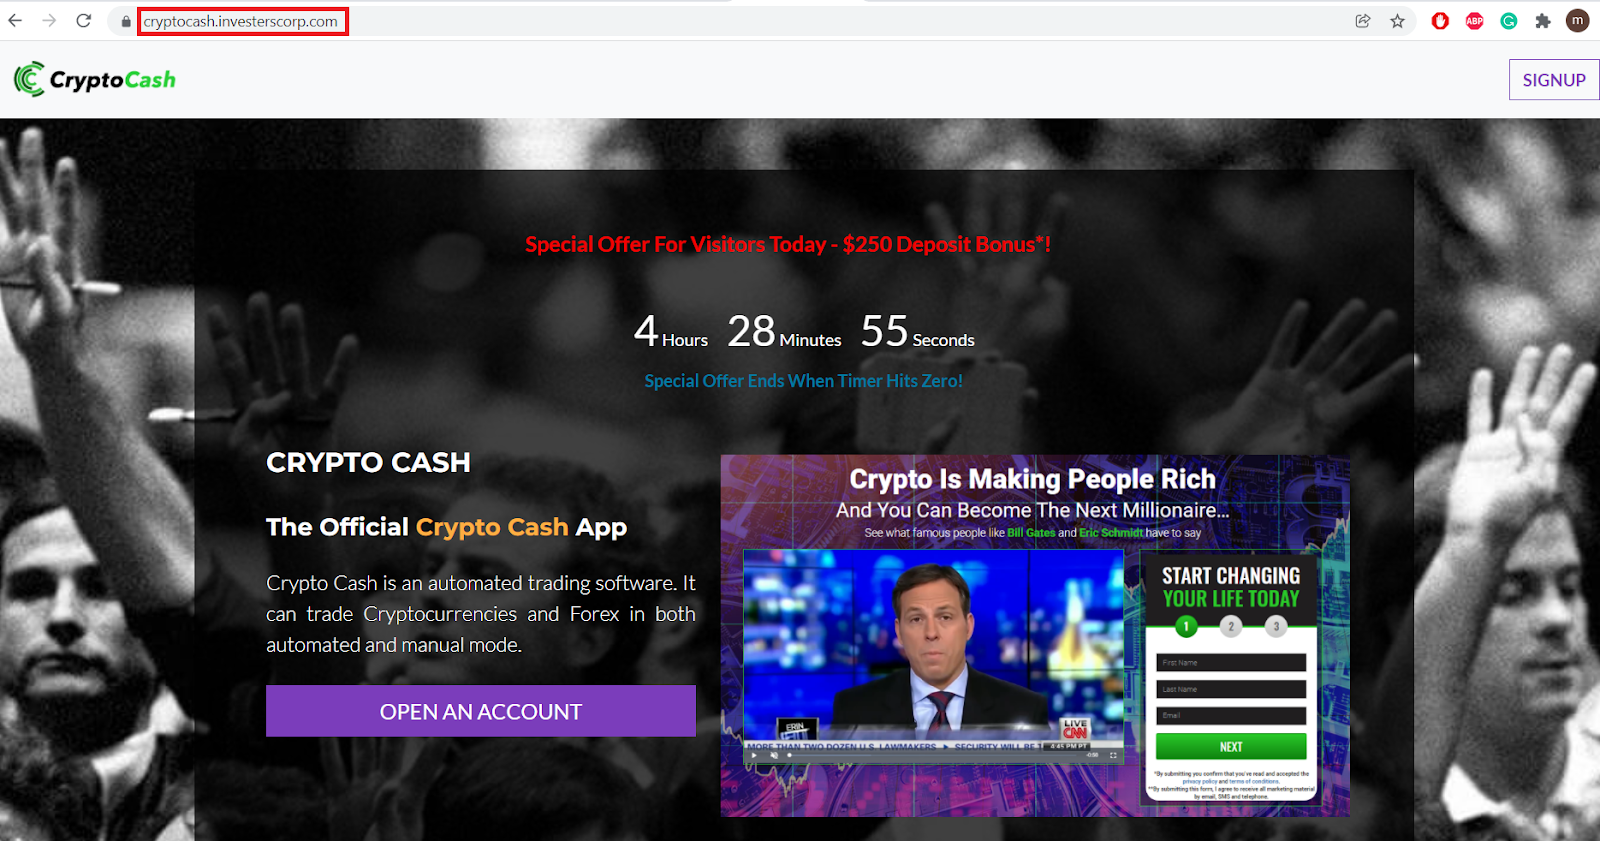 similar domain and layout to Crypto Cash